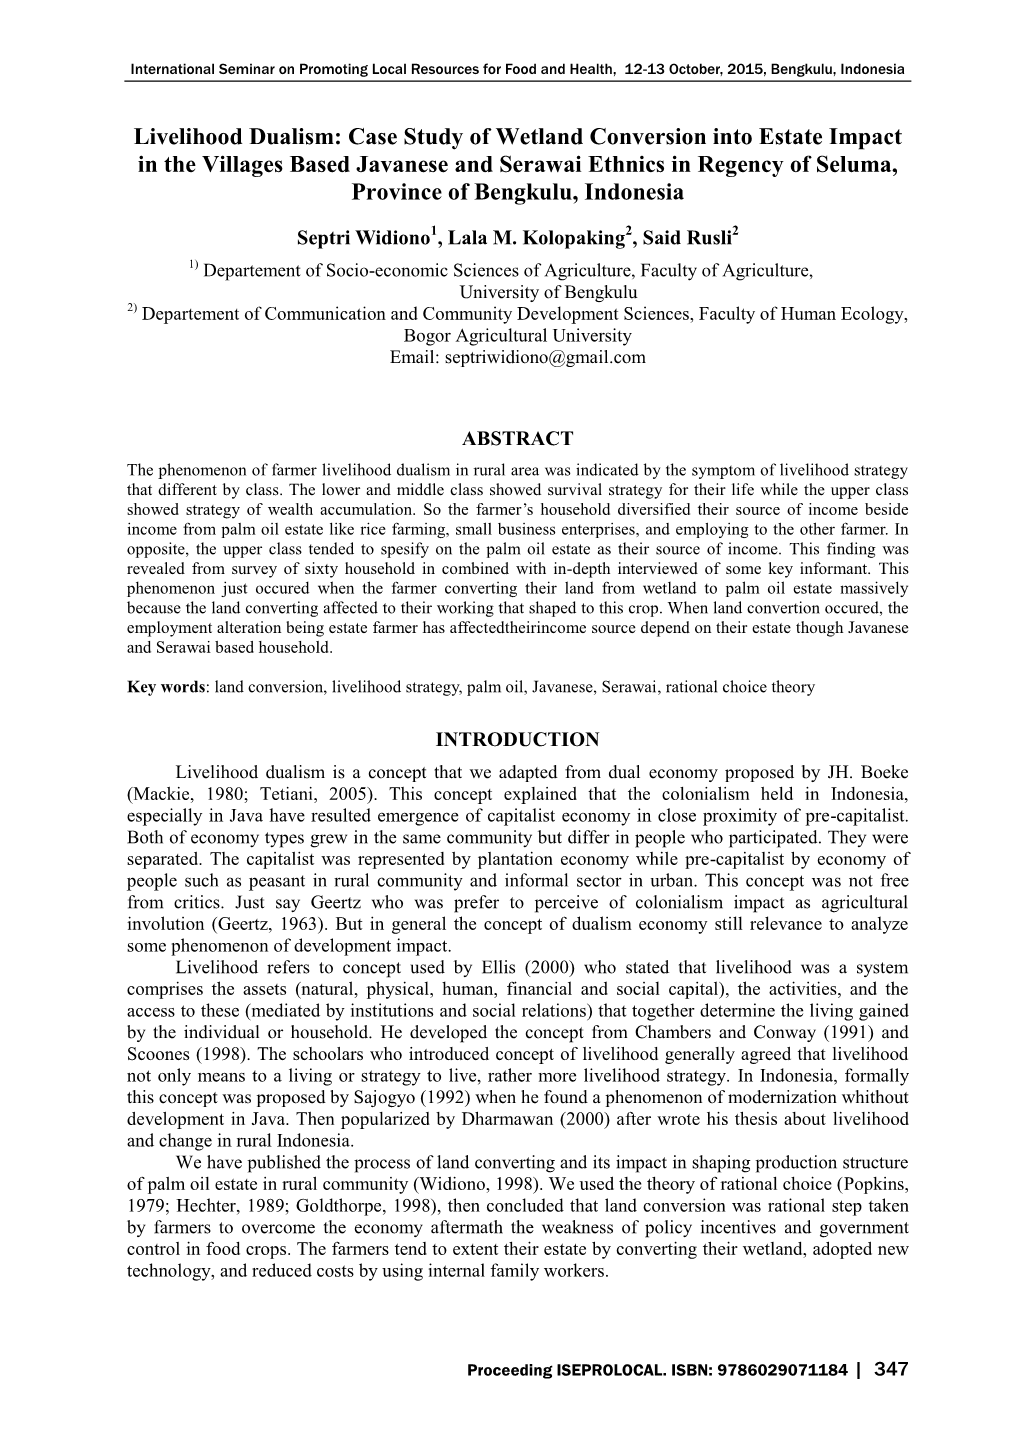 Livelihood Dualism: Case Study of Wetland Conversion Into Estate